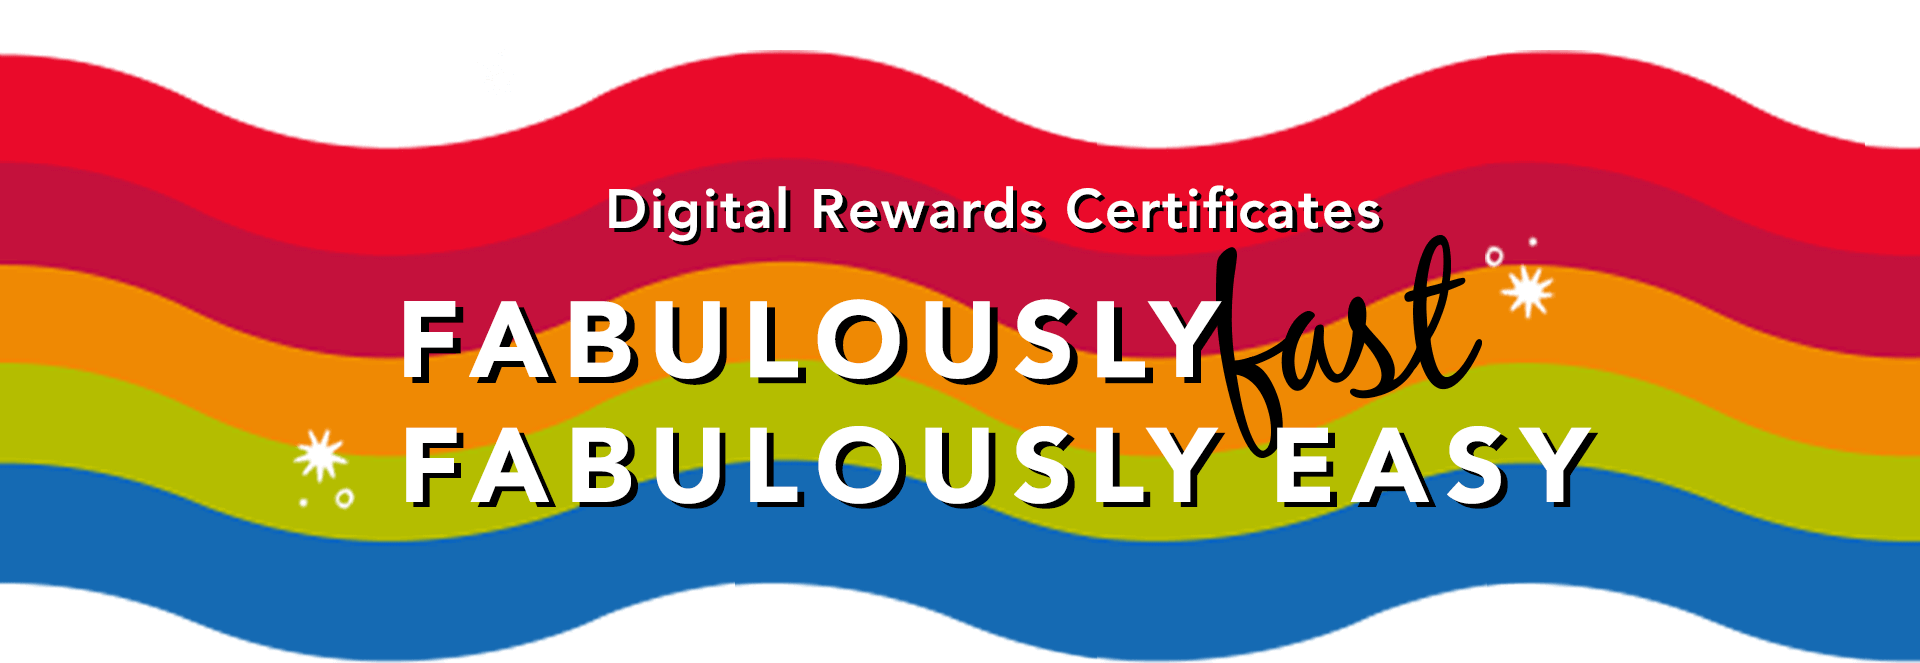 Digital Rewards Certificates. Fabulously fast, Fabulously easy.